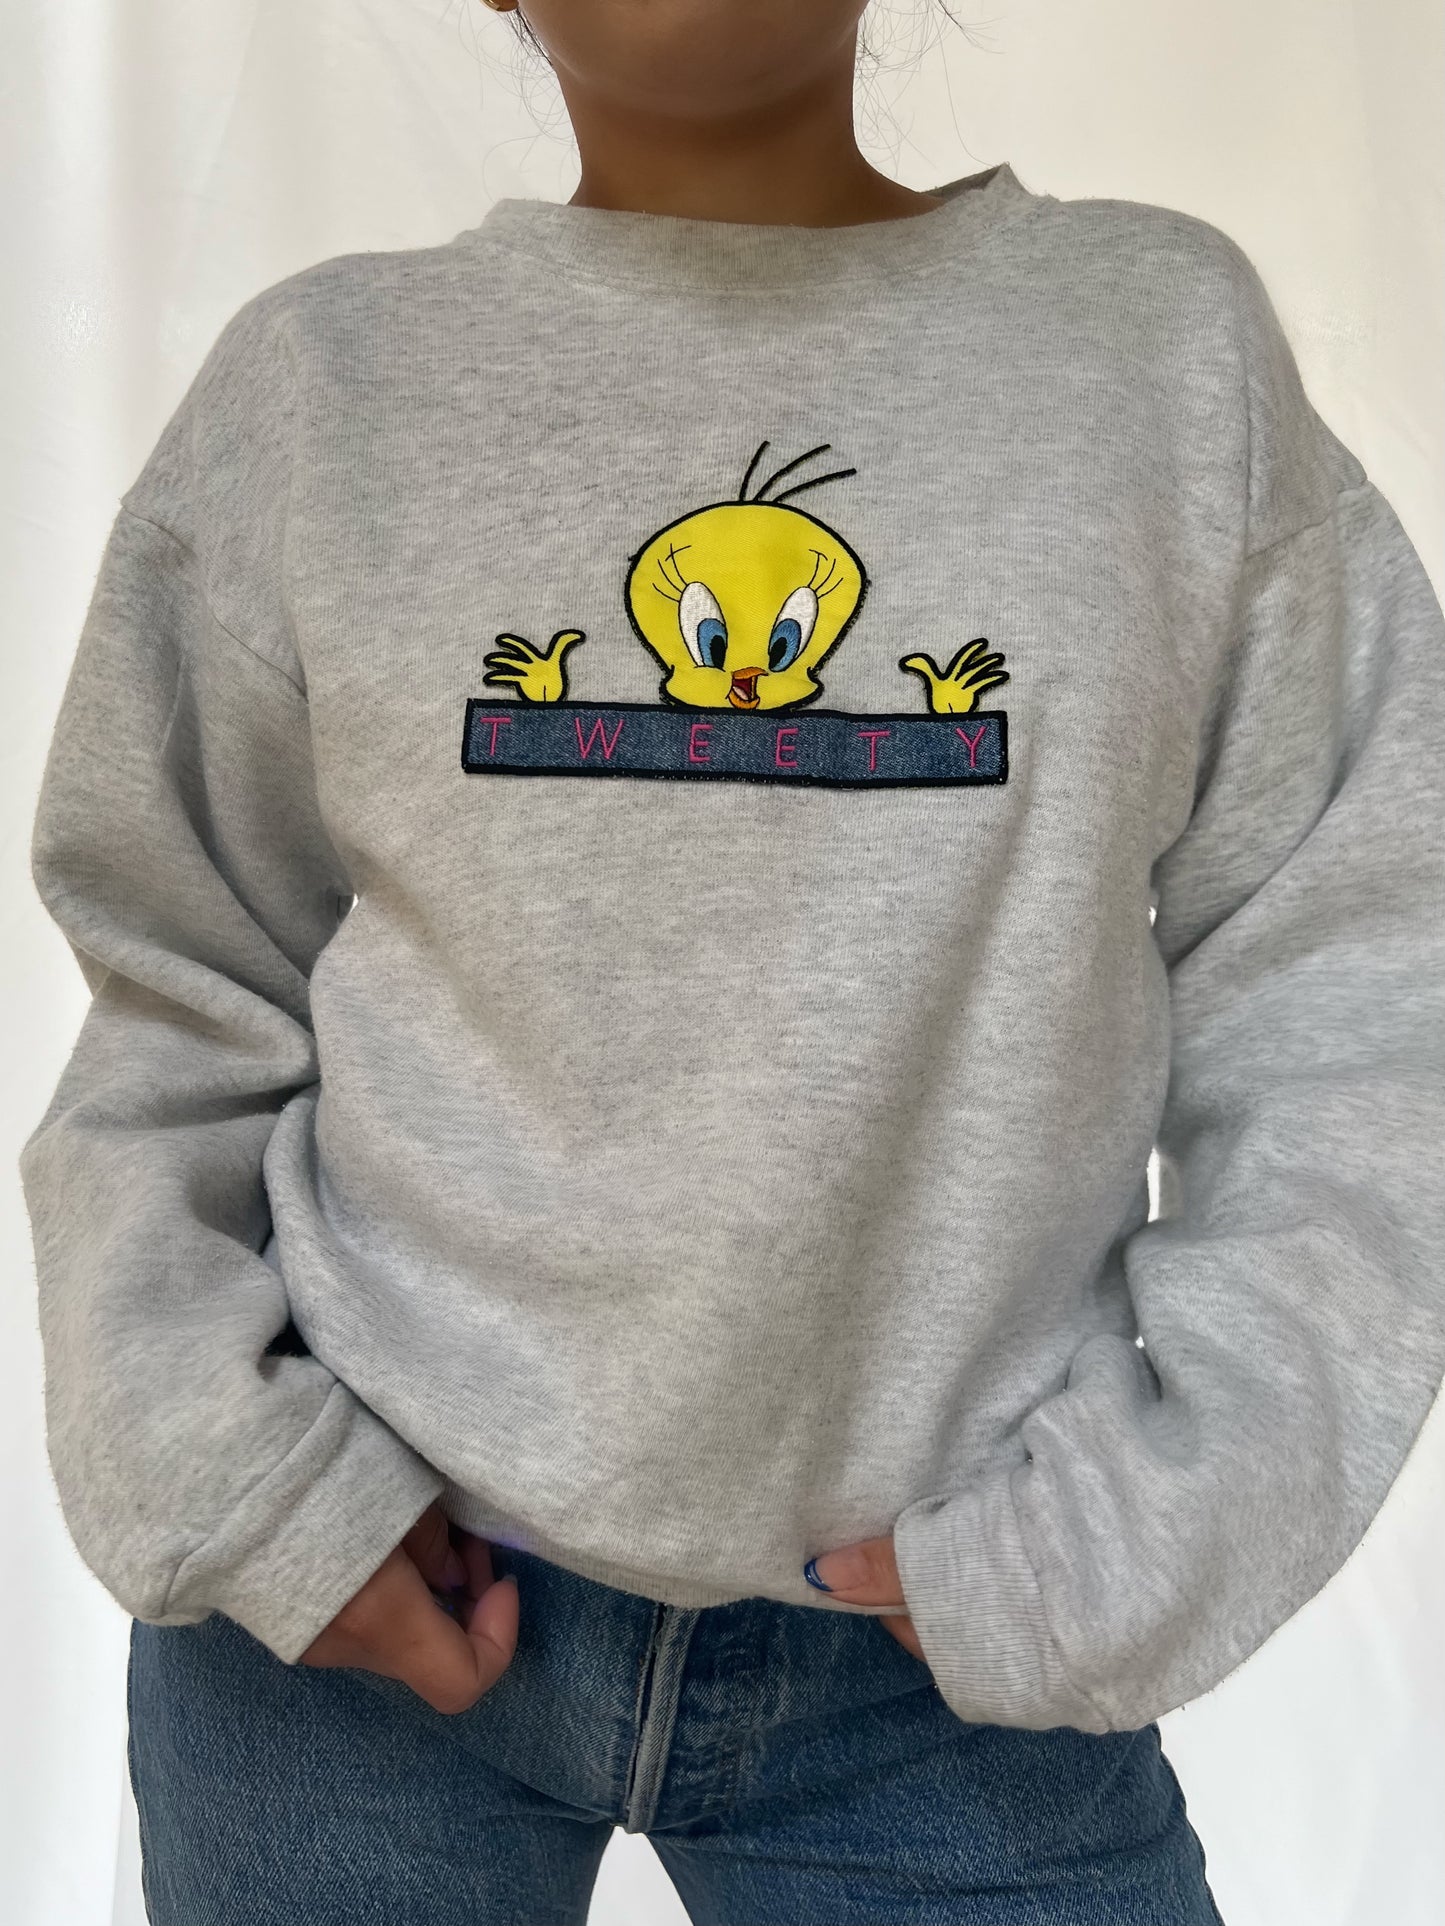 '97 Tweety Sweatshirt - S/M